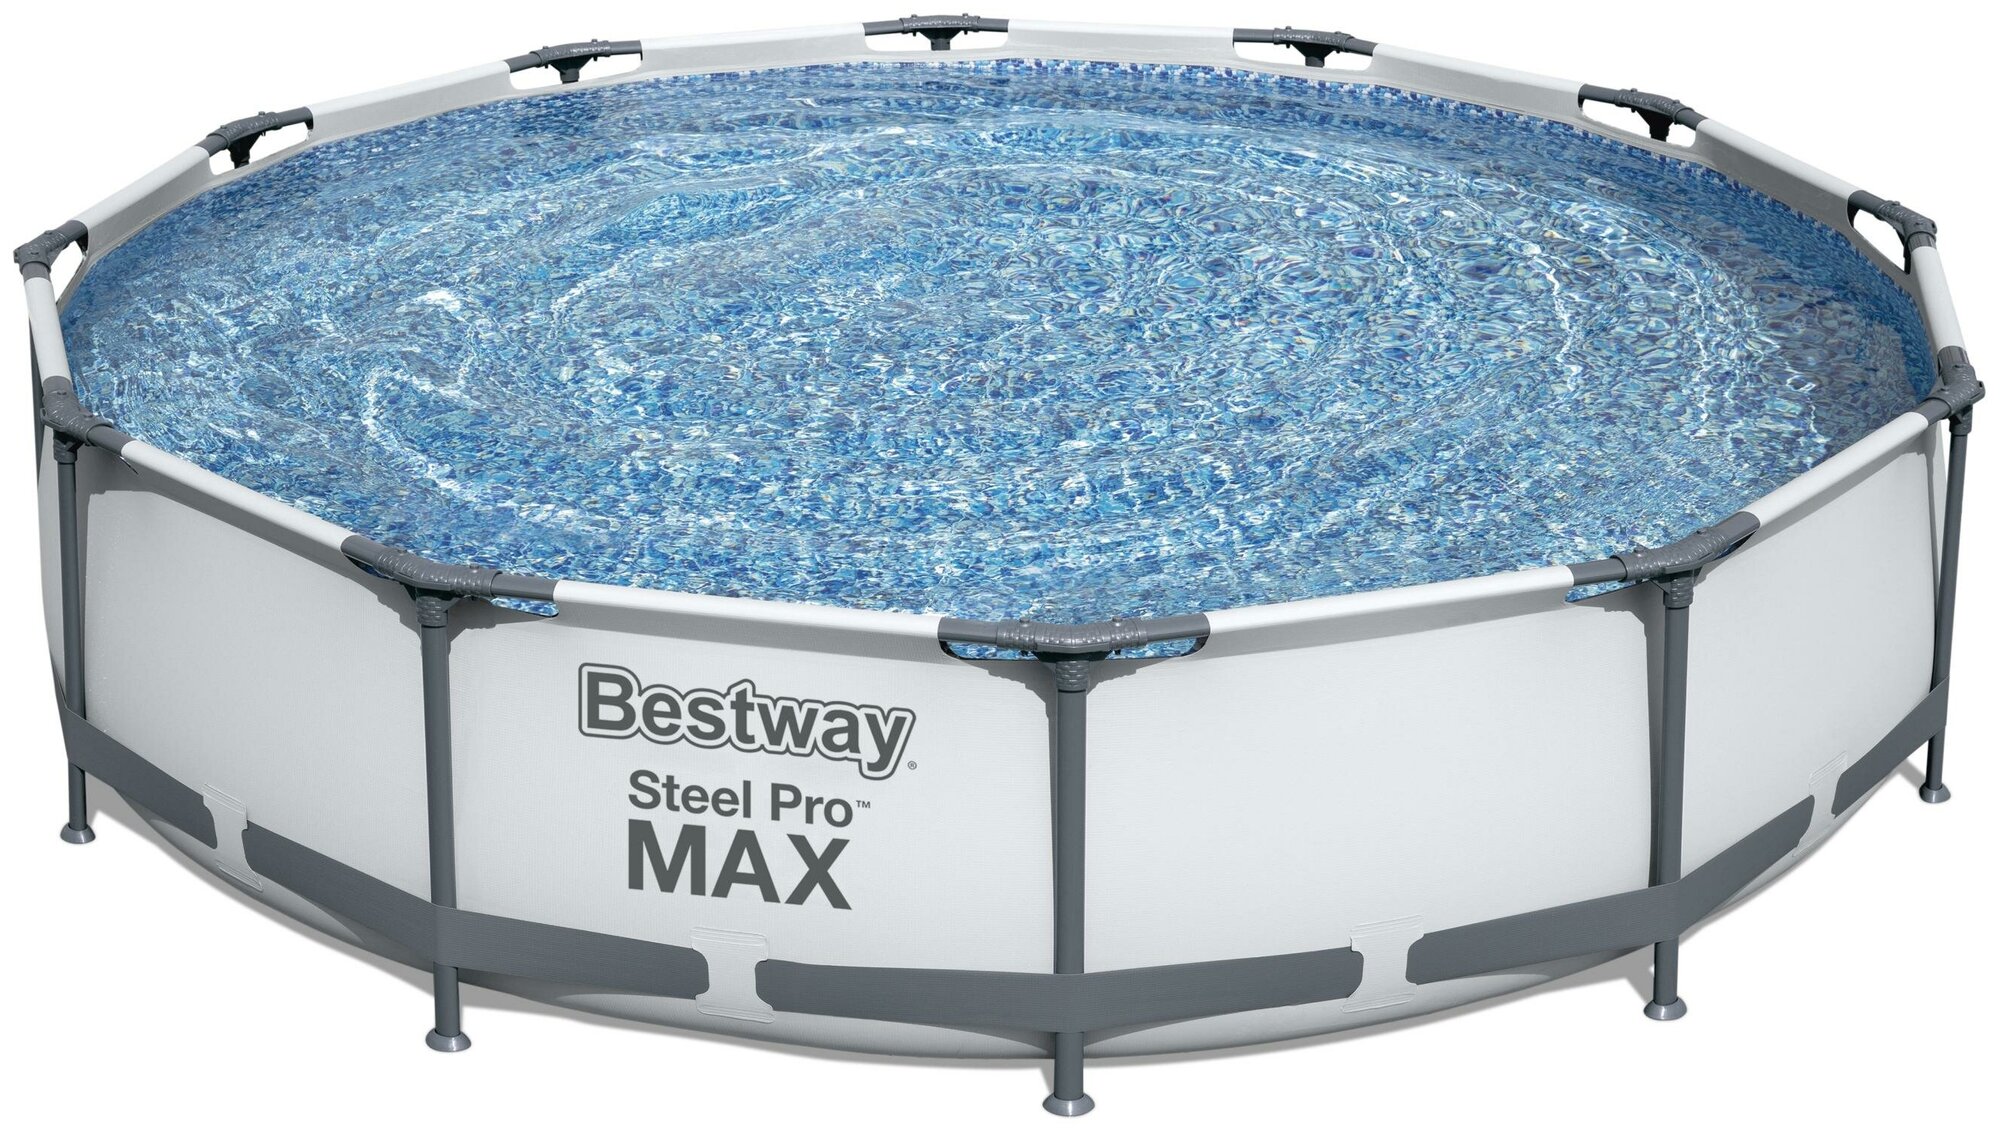 Каркасный бассейн Bestway Steel Pro Max 366х76см, 6473л, фил.-насос 1249л/ч